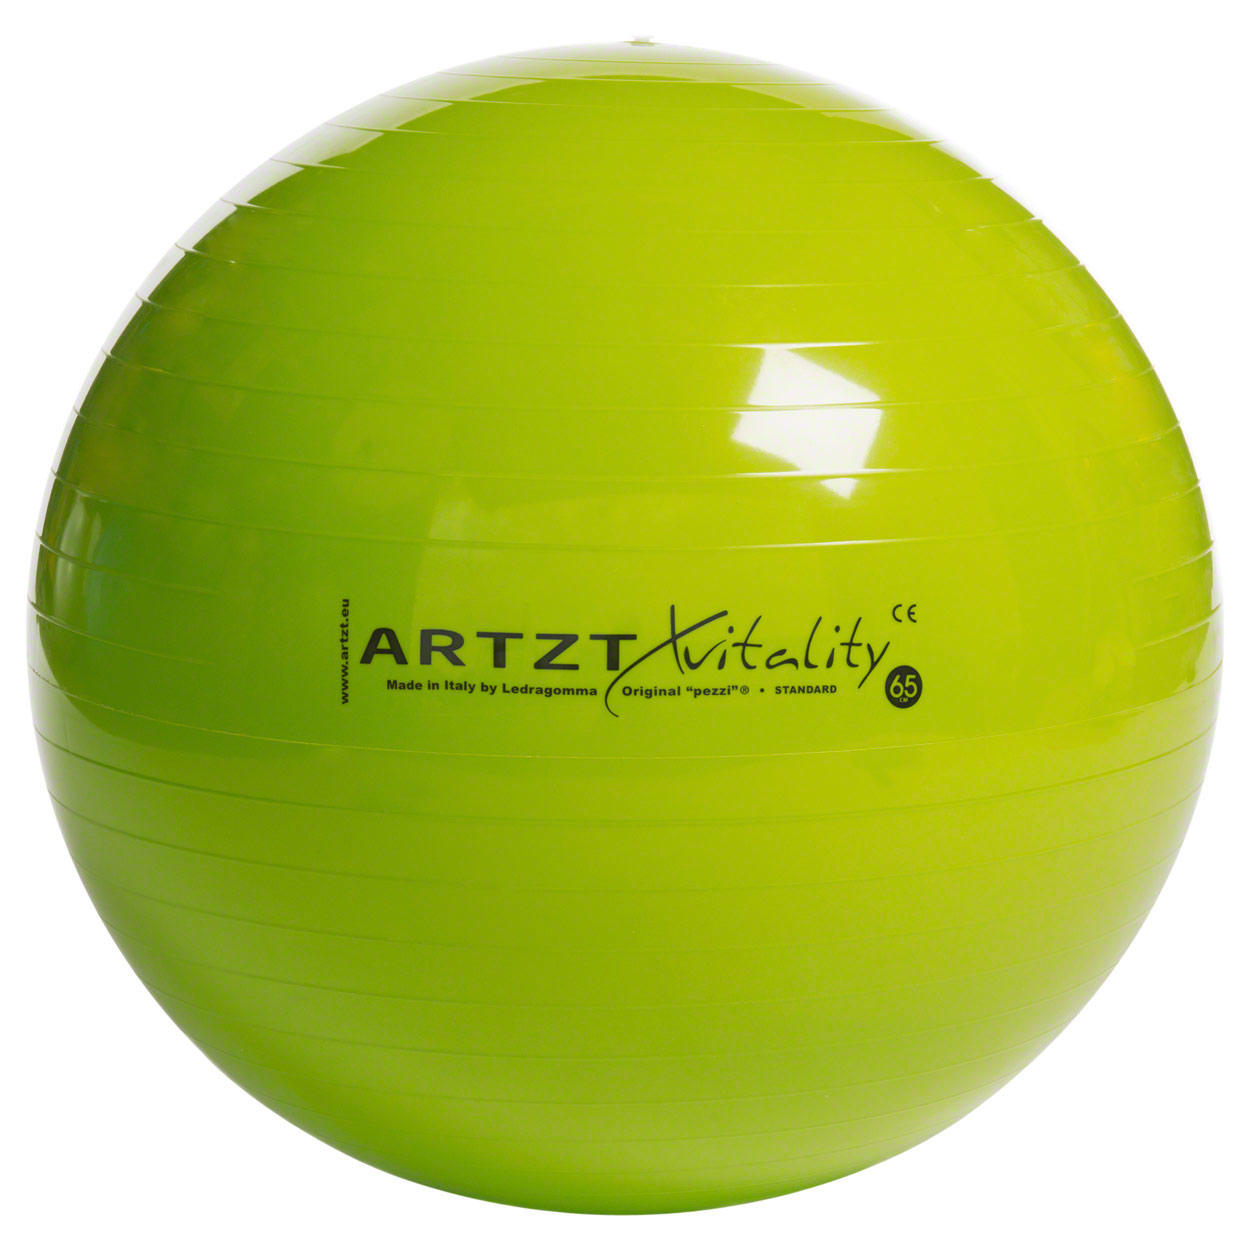 ARTZT vitality Fitness-Ball Standard, ø 65 cm, grün ...